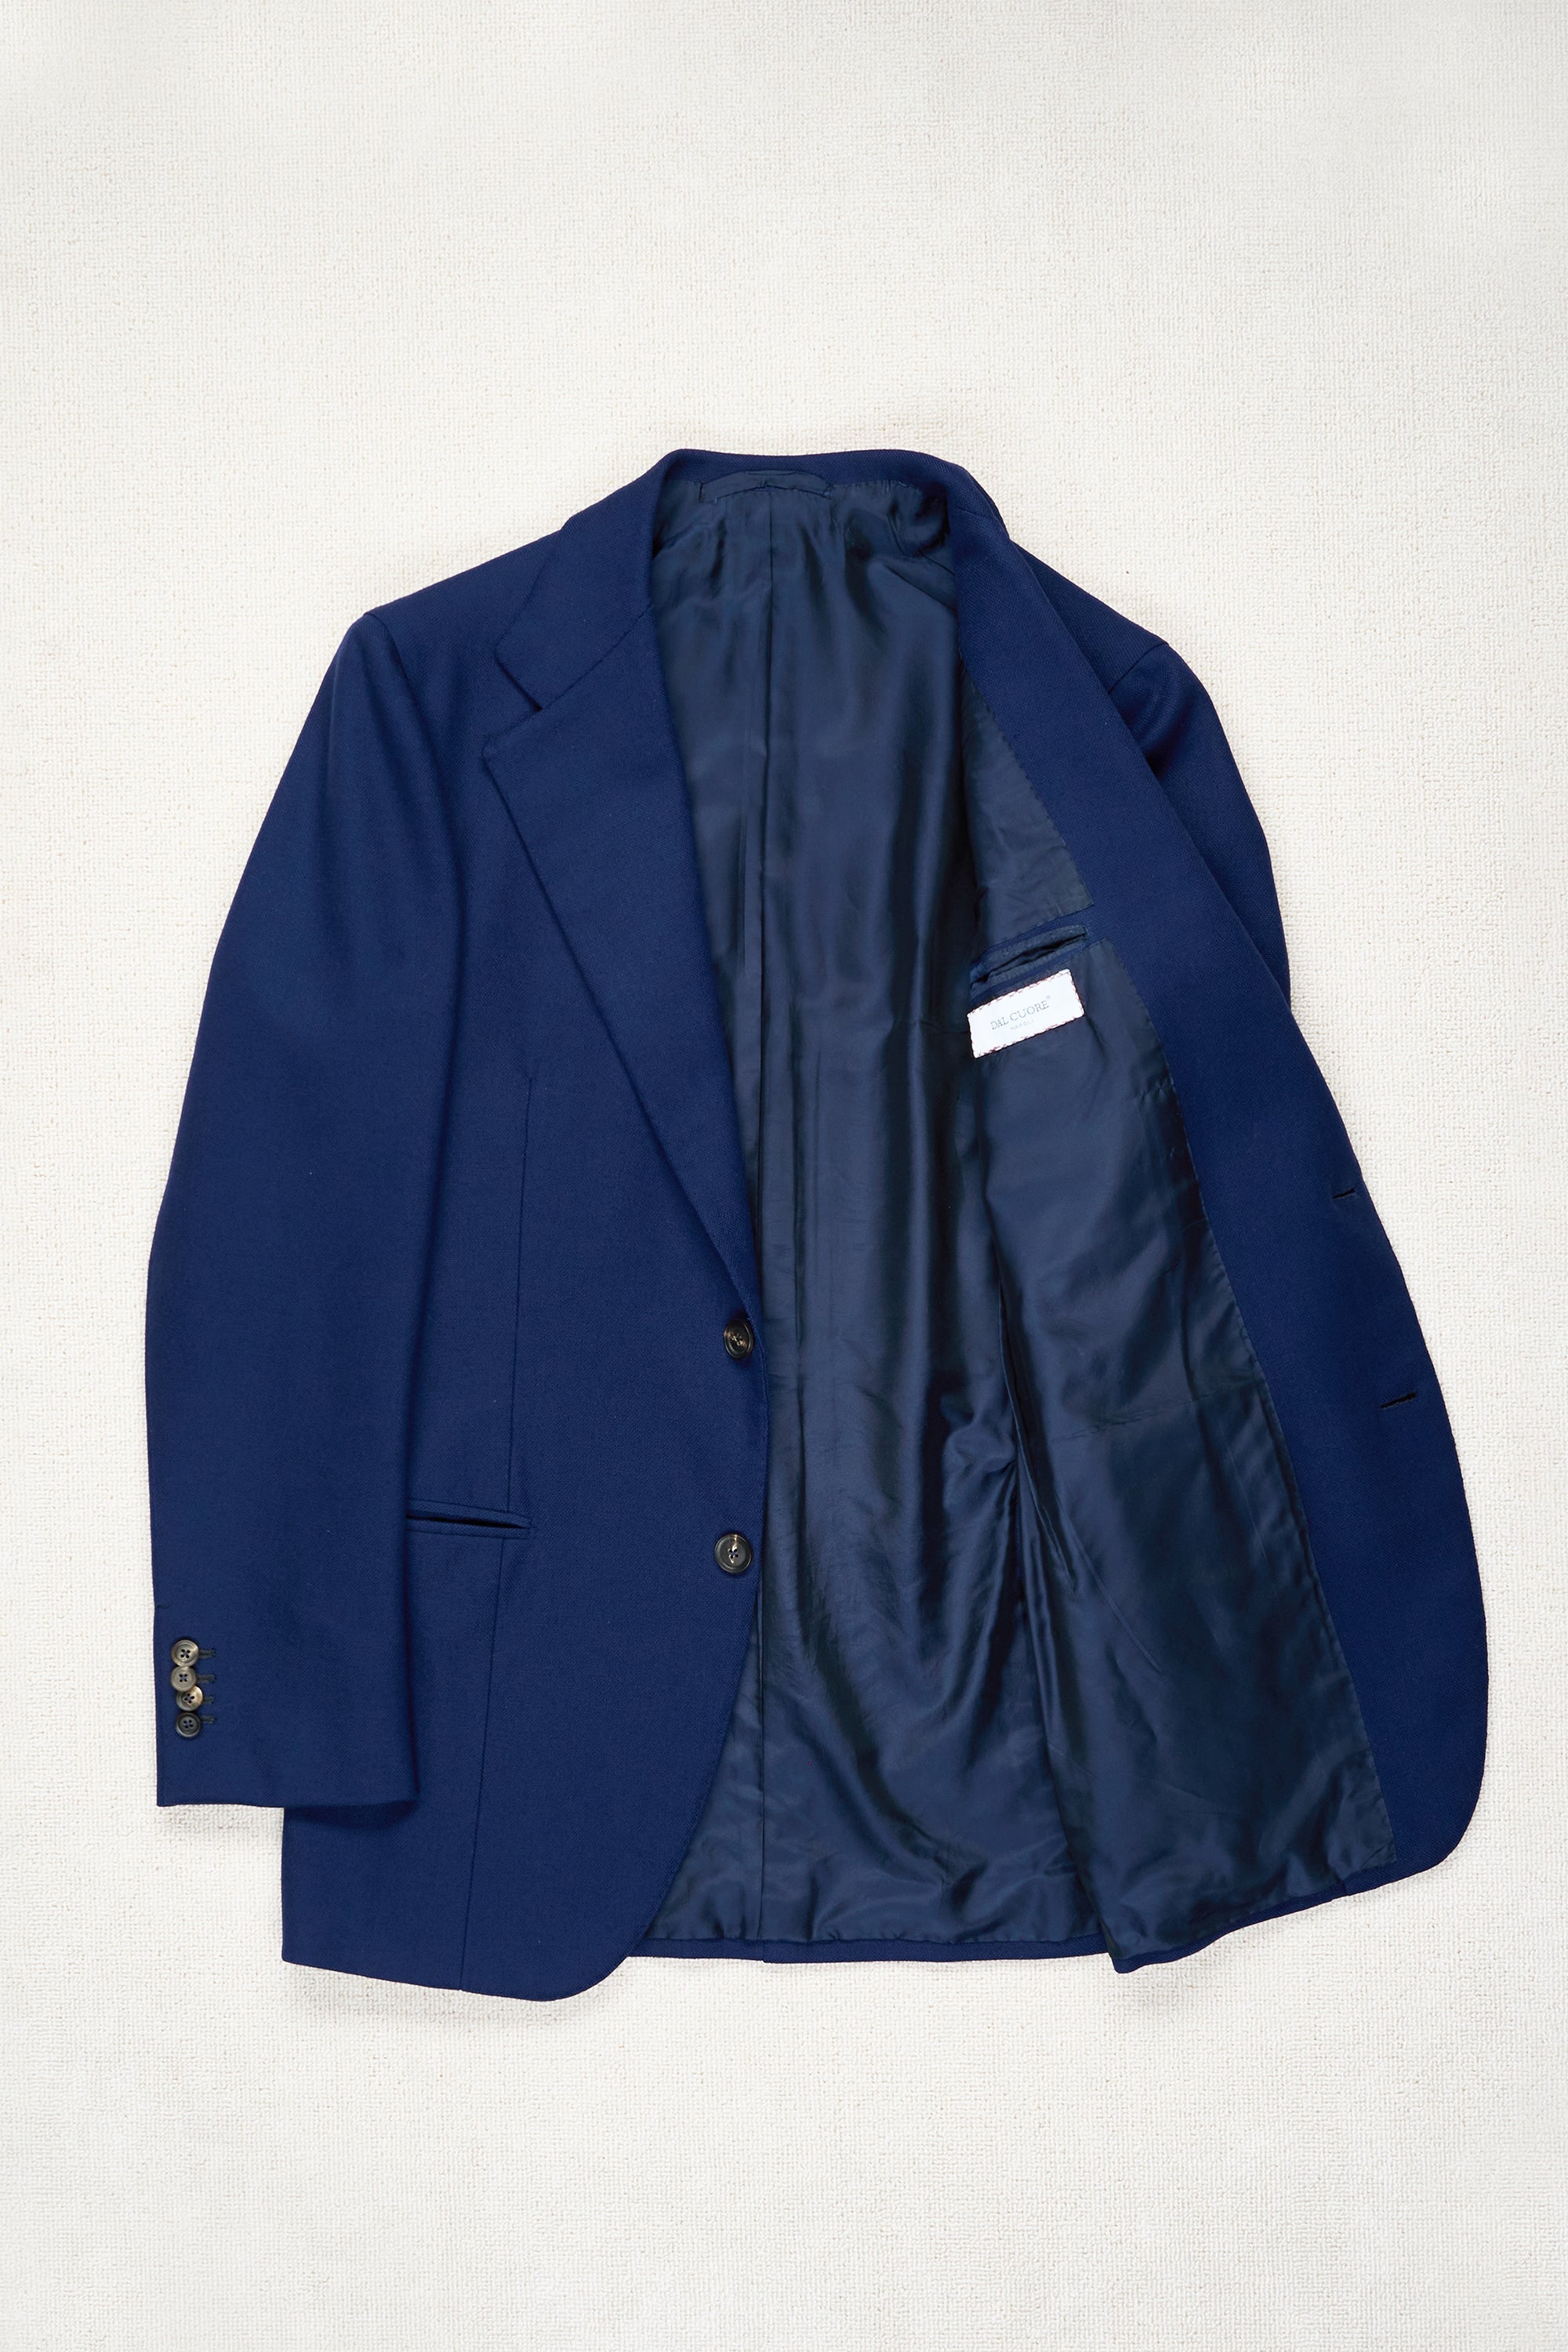 Dalcuore Royal Blue Wool Sport Coat Bespoke